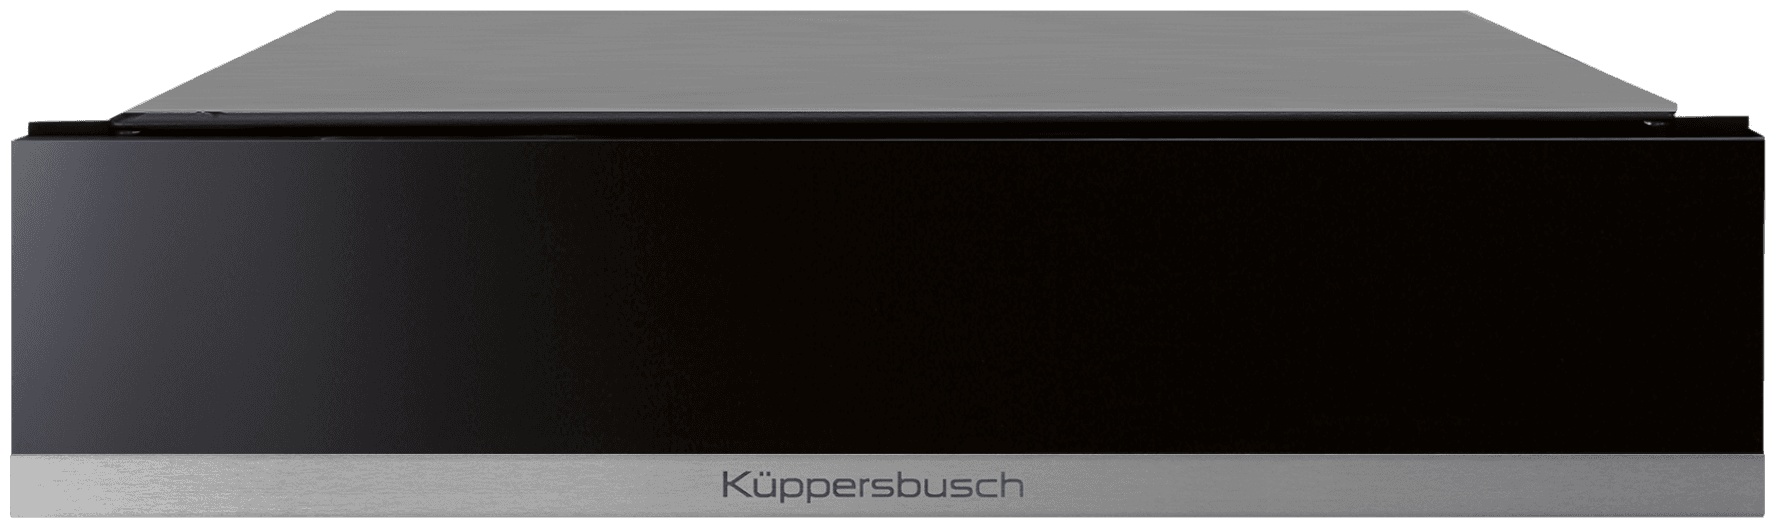 Вакууматор Kuppersbusch CSV 6800.0 S